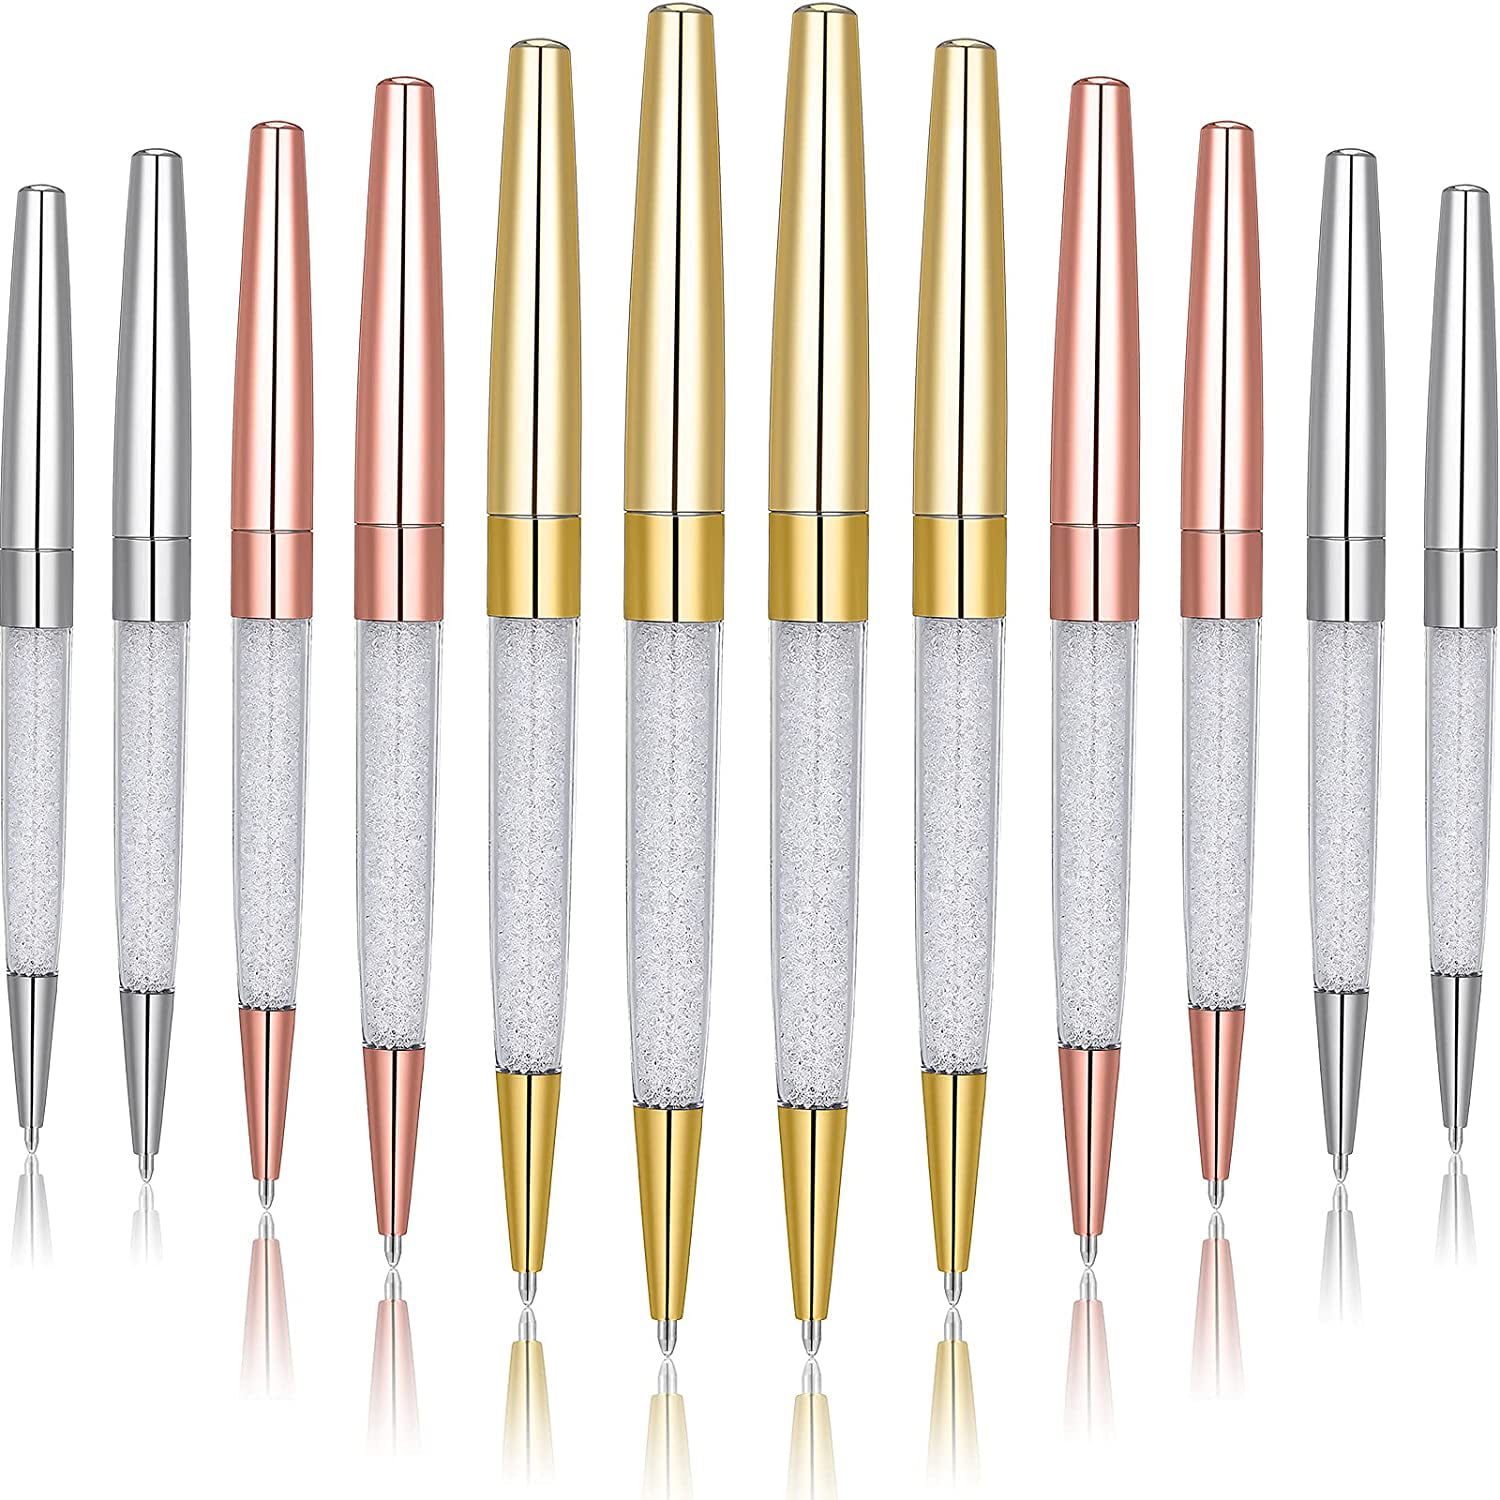 4 Pack Diamond Pen Rose Gold Pen Crystal Ballpoint Pens Bling Metal Ballpoint Pen Office Supplies Black Ink Includes Extra Pen Refills 